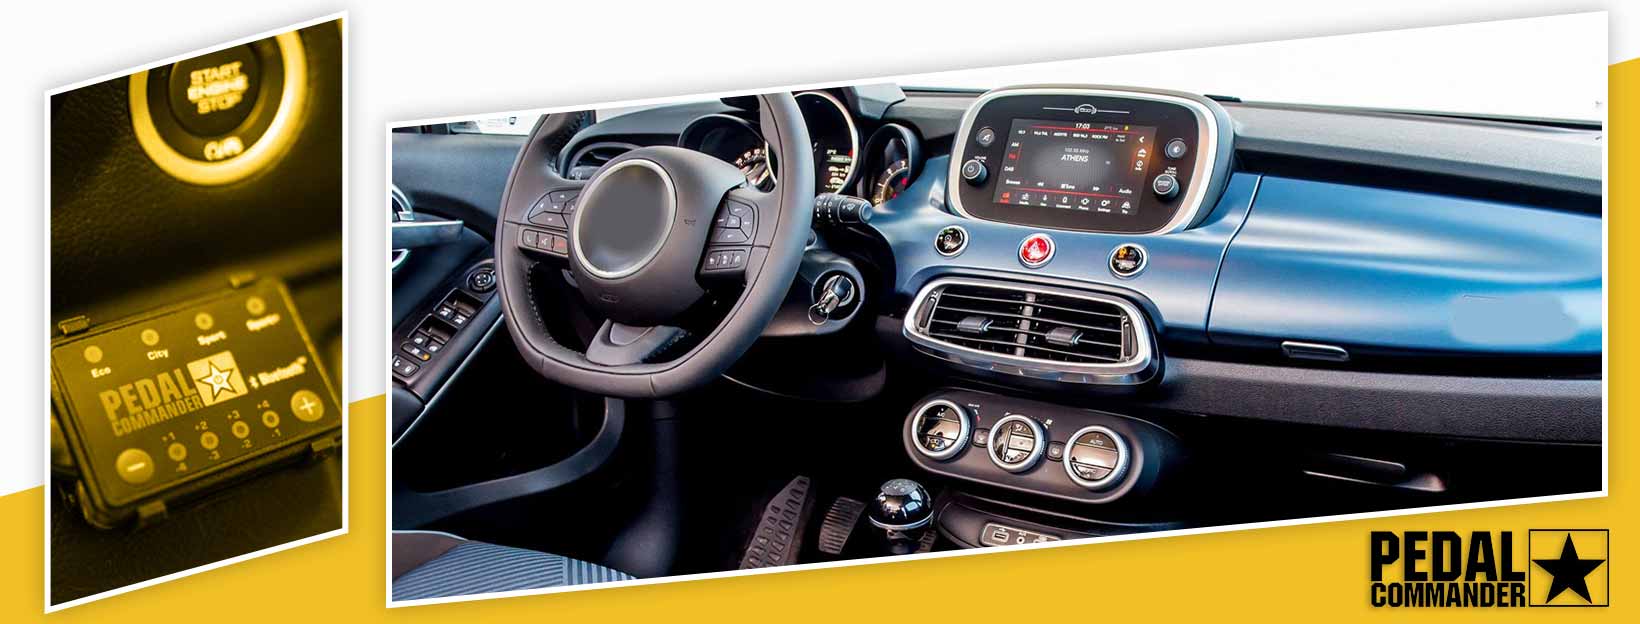 Pedal Commander for Fiat 500 - interior